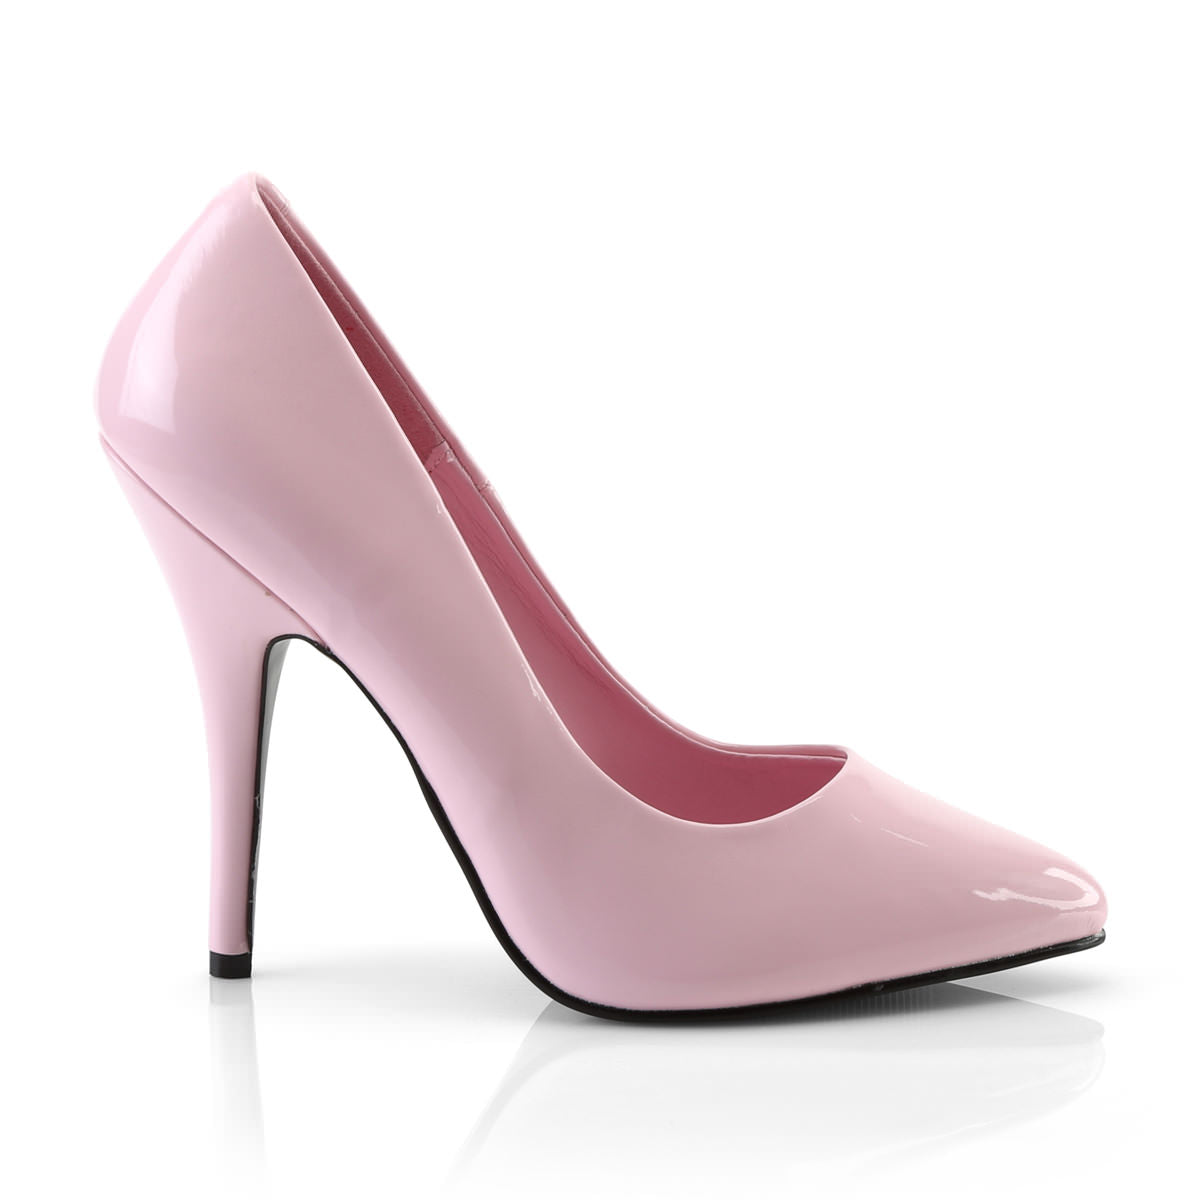 5 Inch Heel SEDUCE-420 Baby Pink Patent